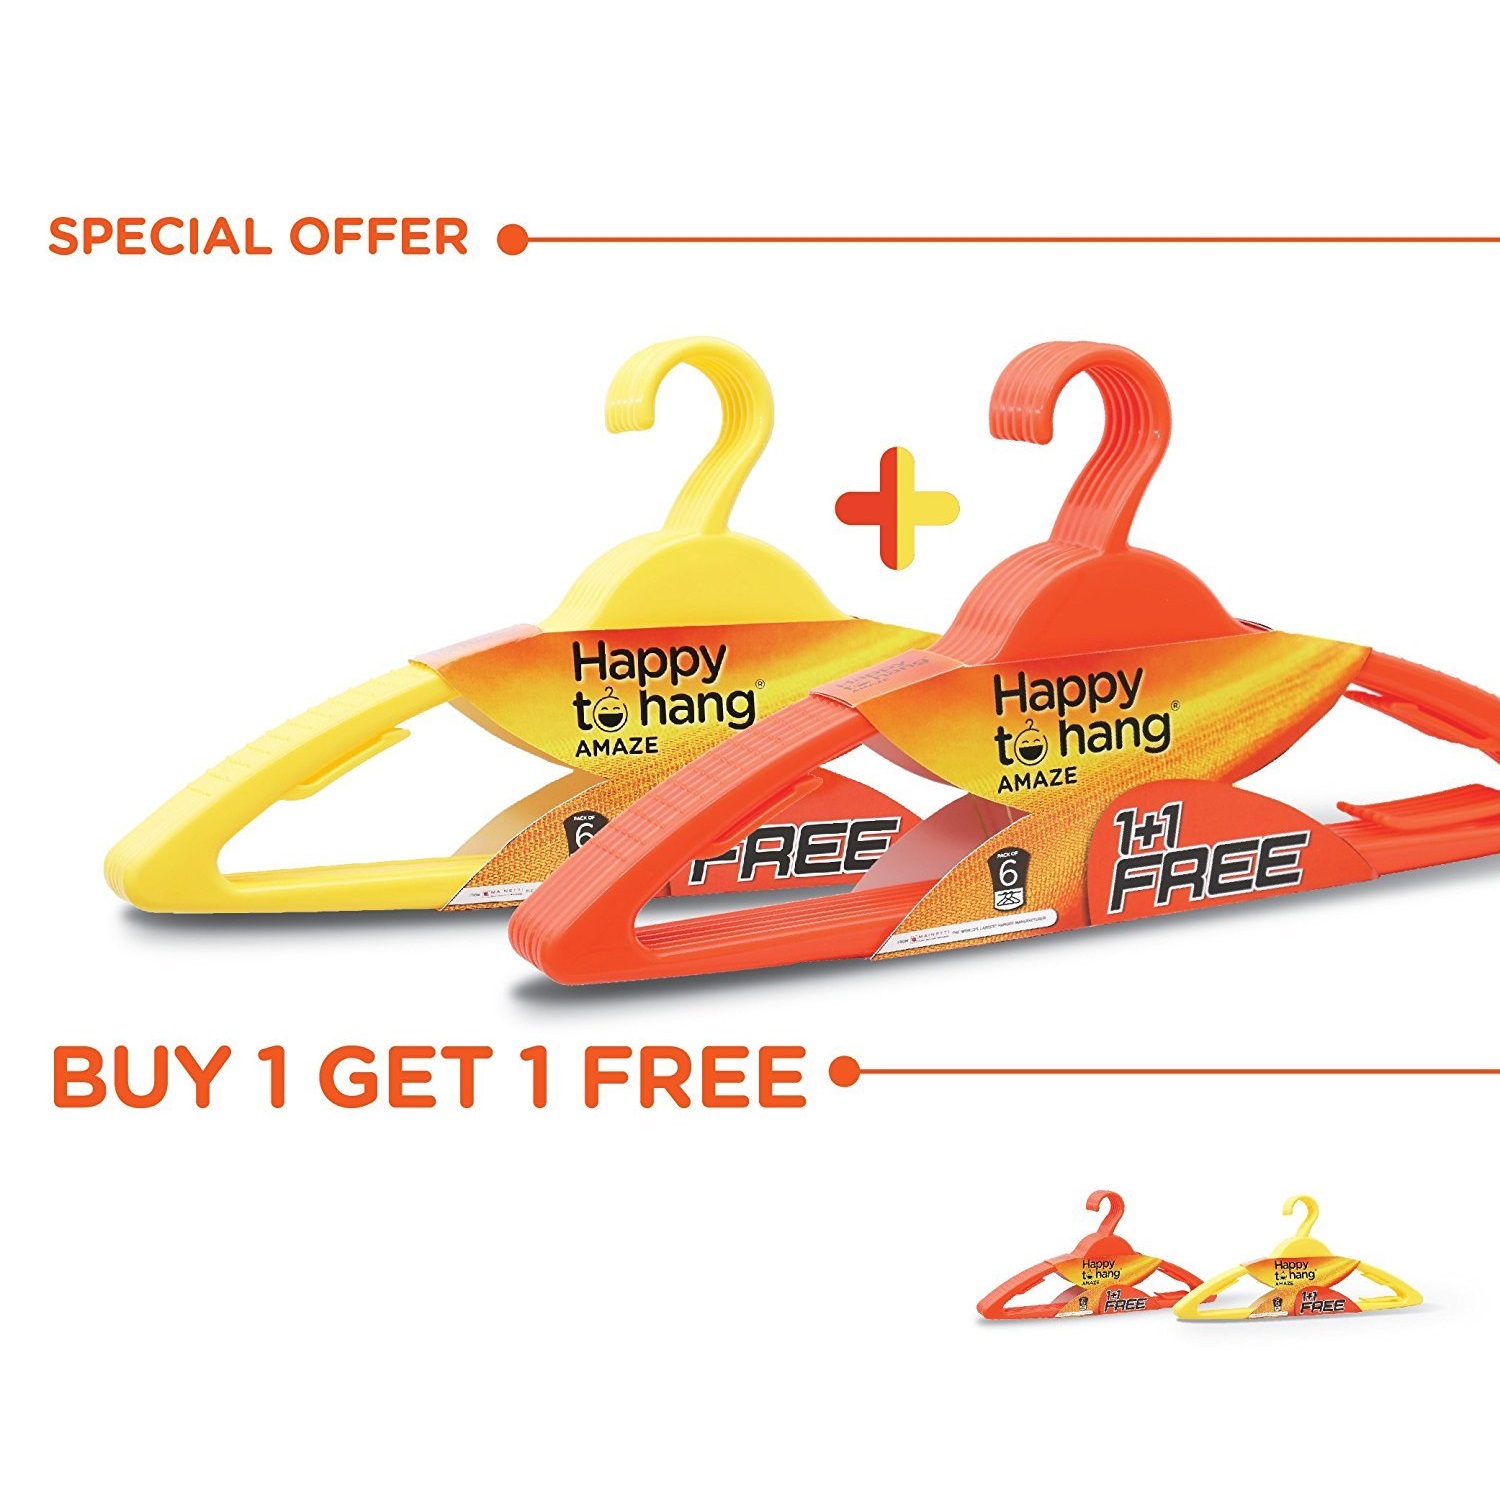 Happy-To-Hang-Amaze-6+6-Piece-Polypropylene-Hangers,-Yellow-and-Orange-(Buy-1-Get-1-Free)